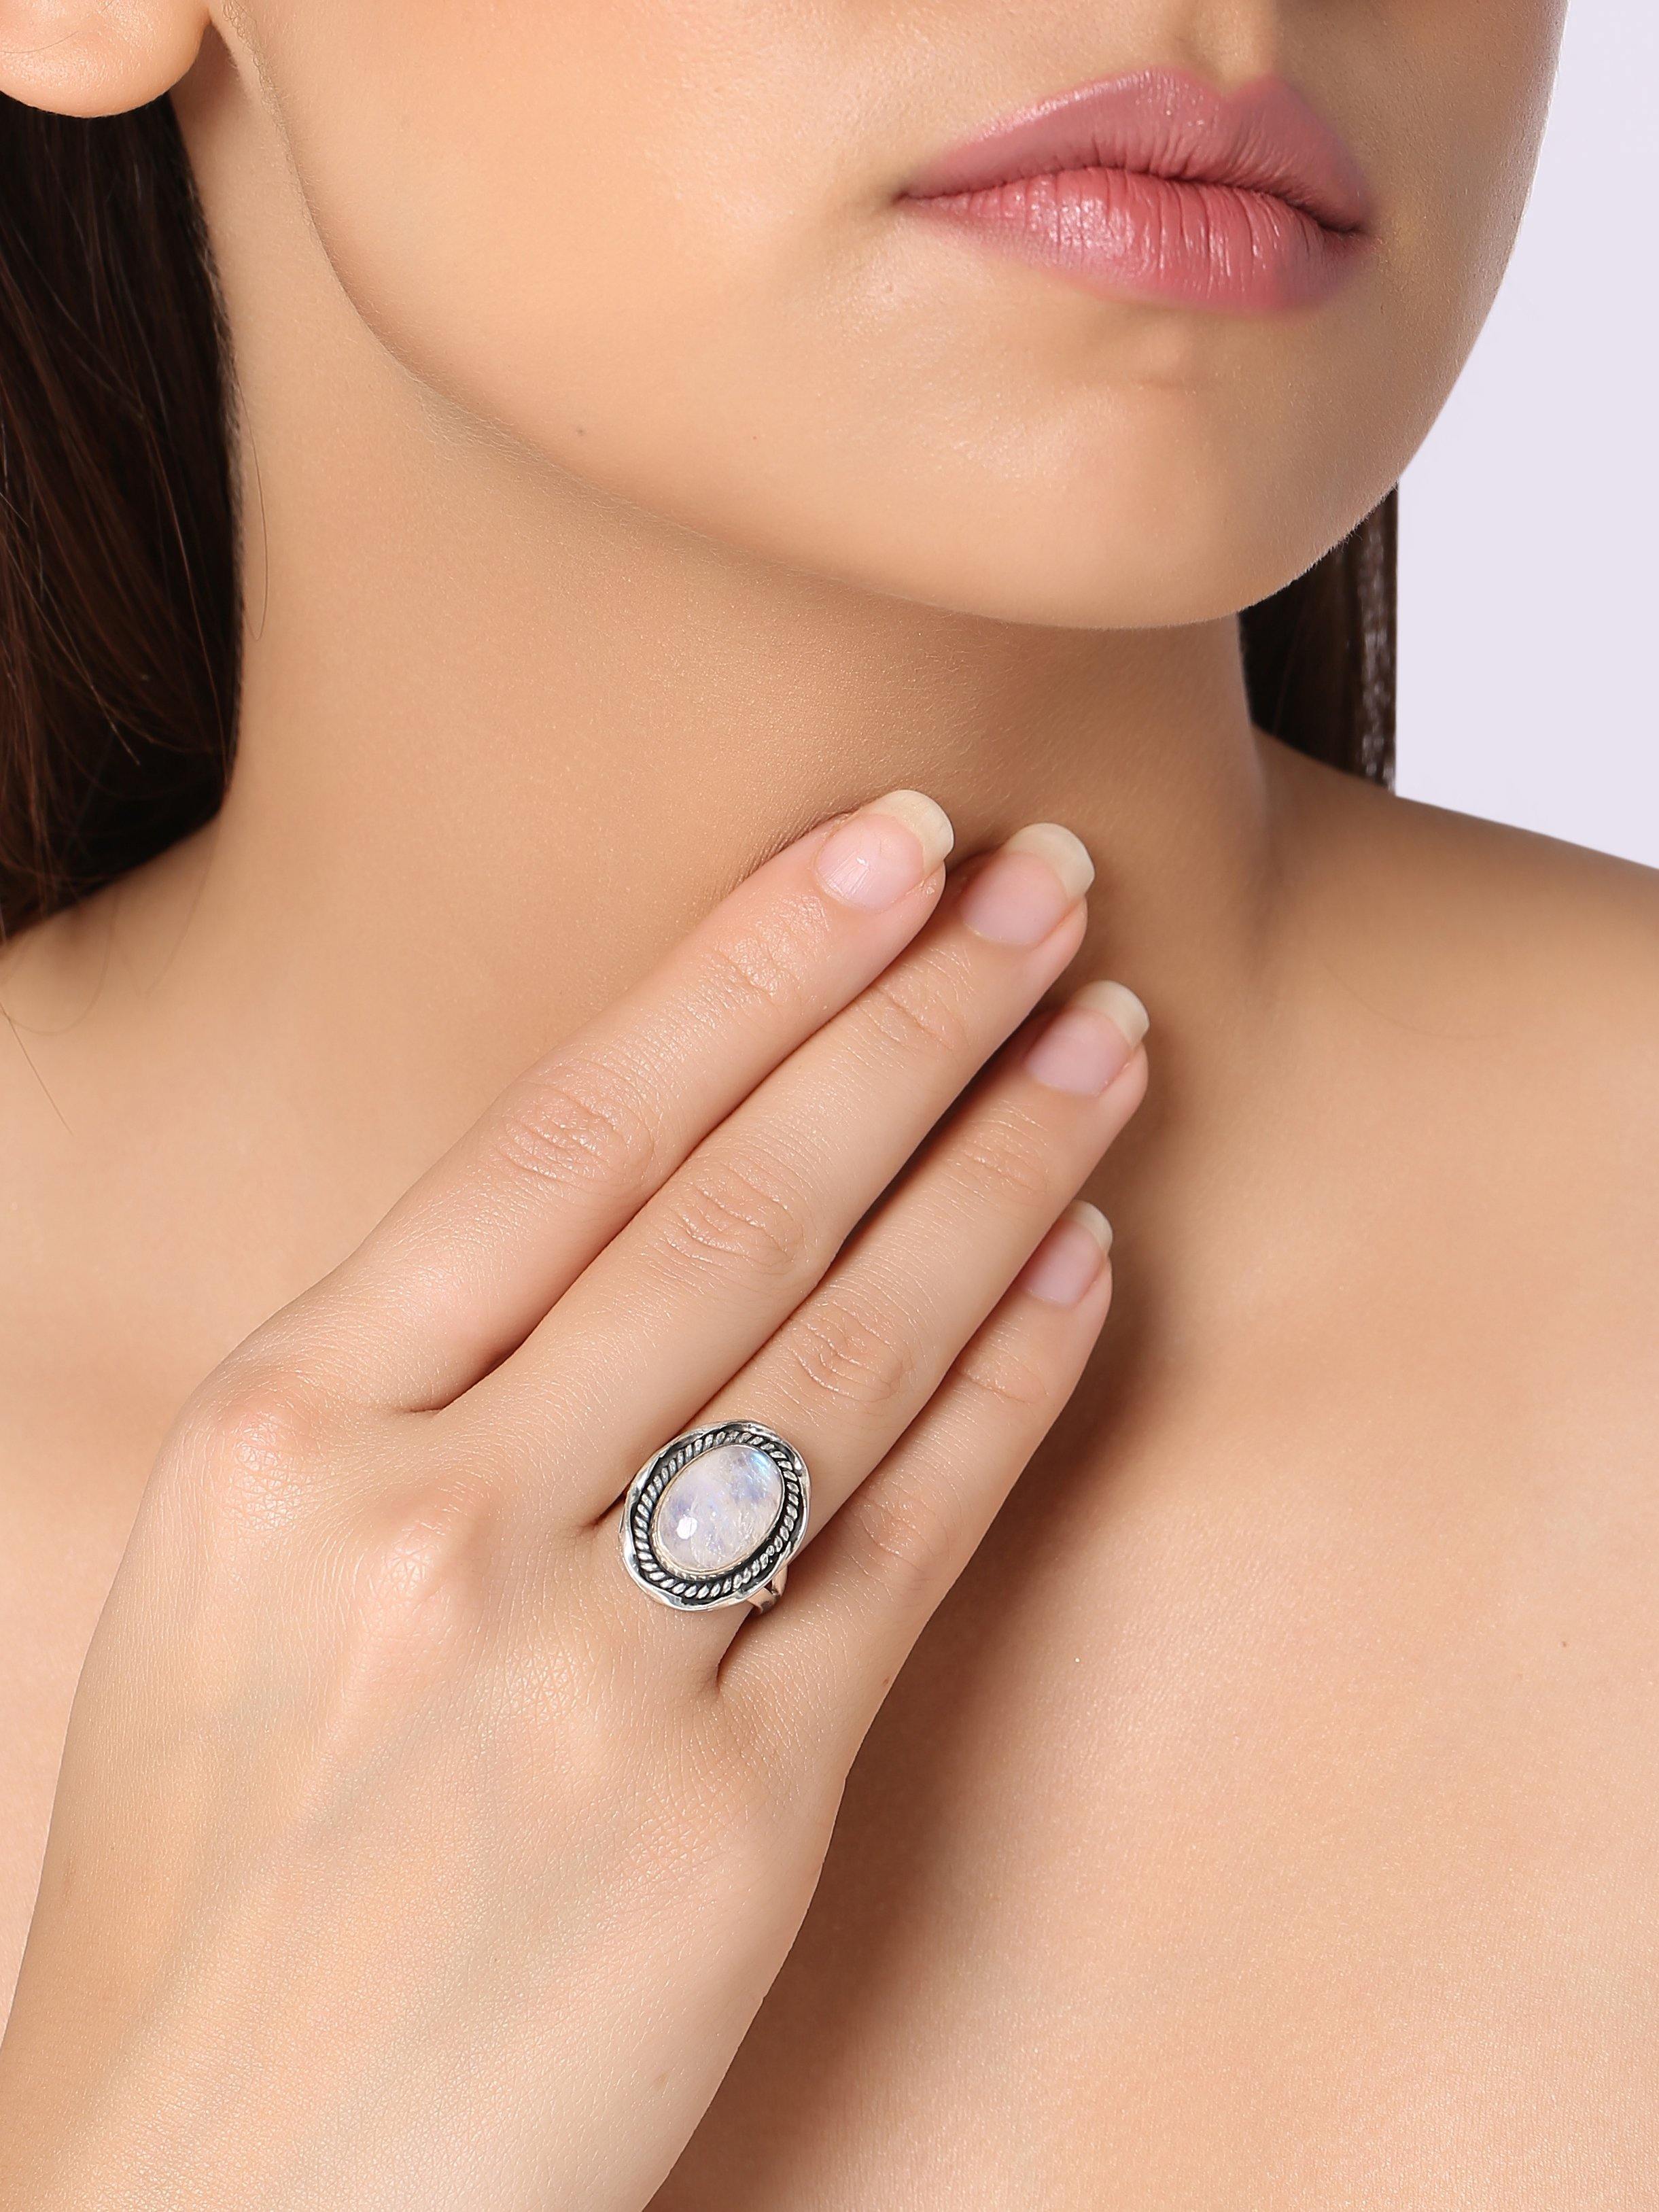 Rainbow Moonstone Solid 925 Sterling Silver Split Shank Ring Jewelry - YoTreasure